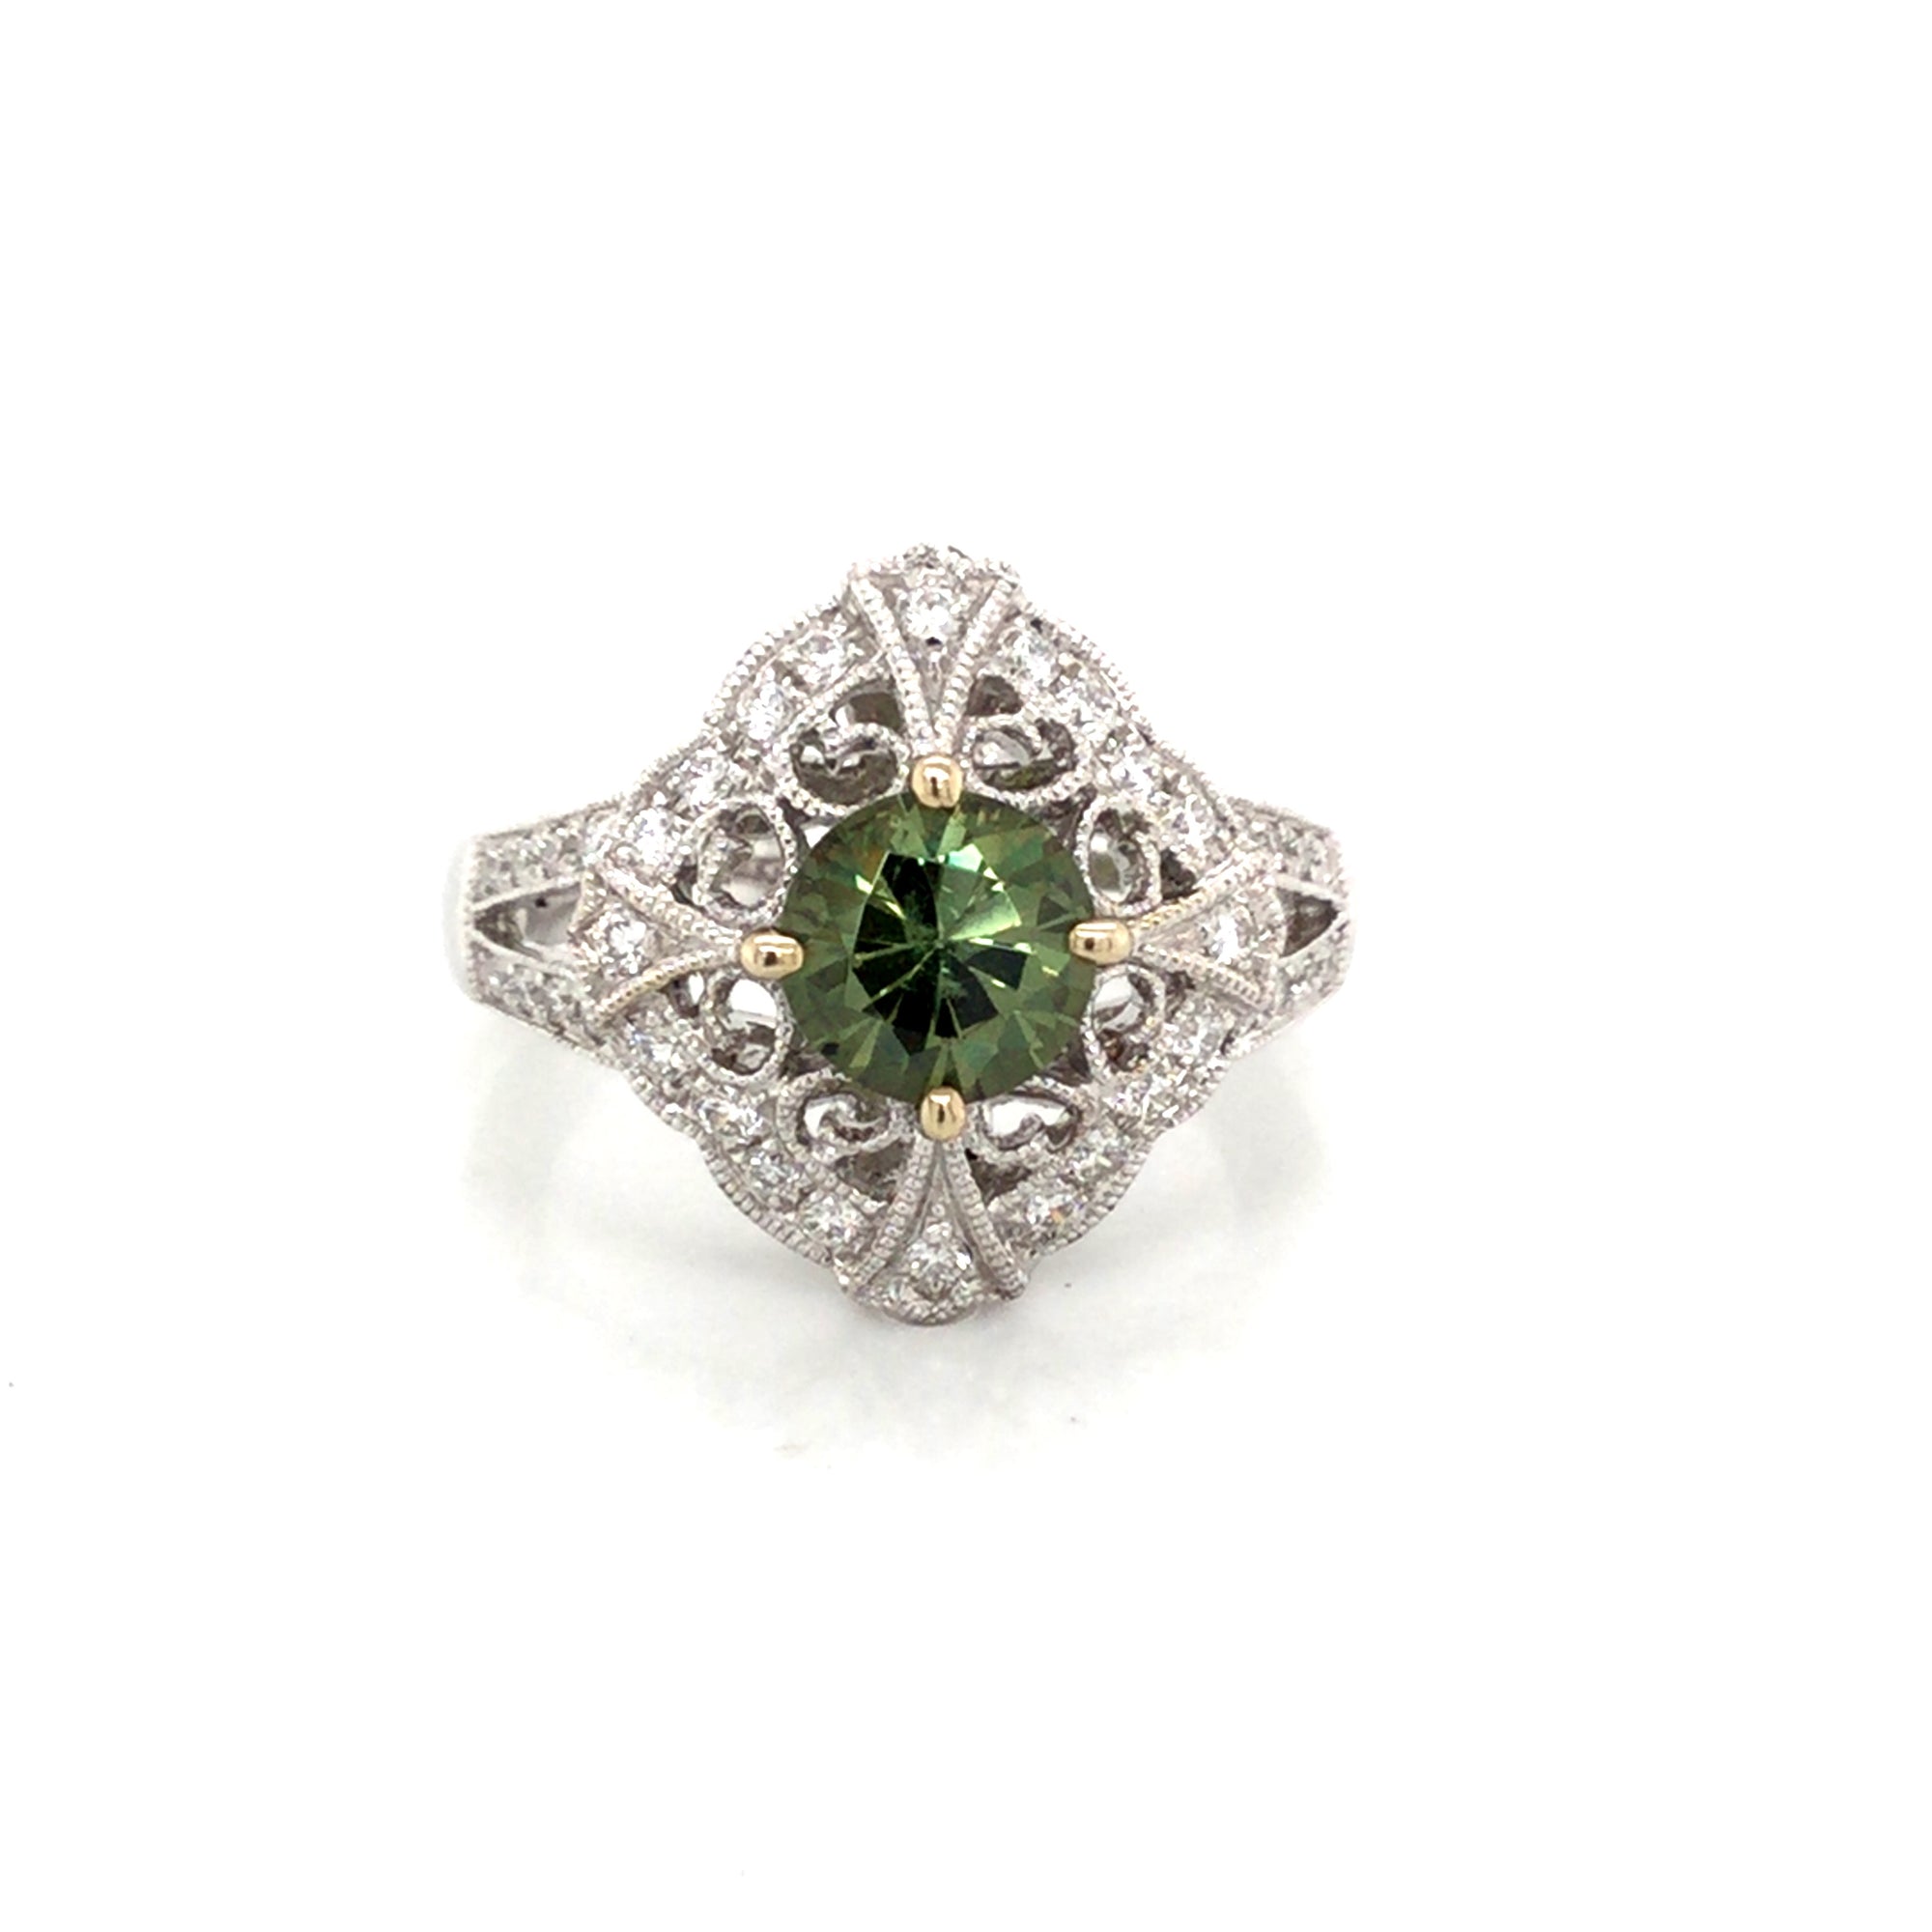 18K White Gold Diamond Vintage Style Ring With Round Diamonds & Green Tsavorite Garnet